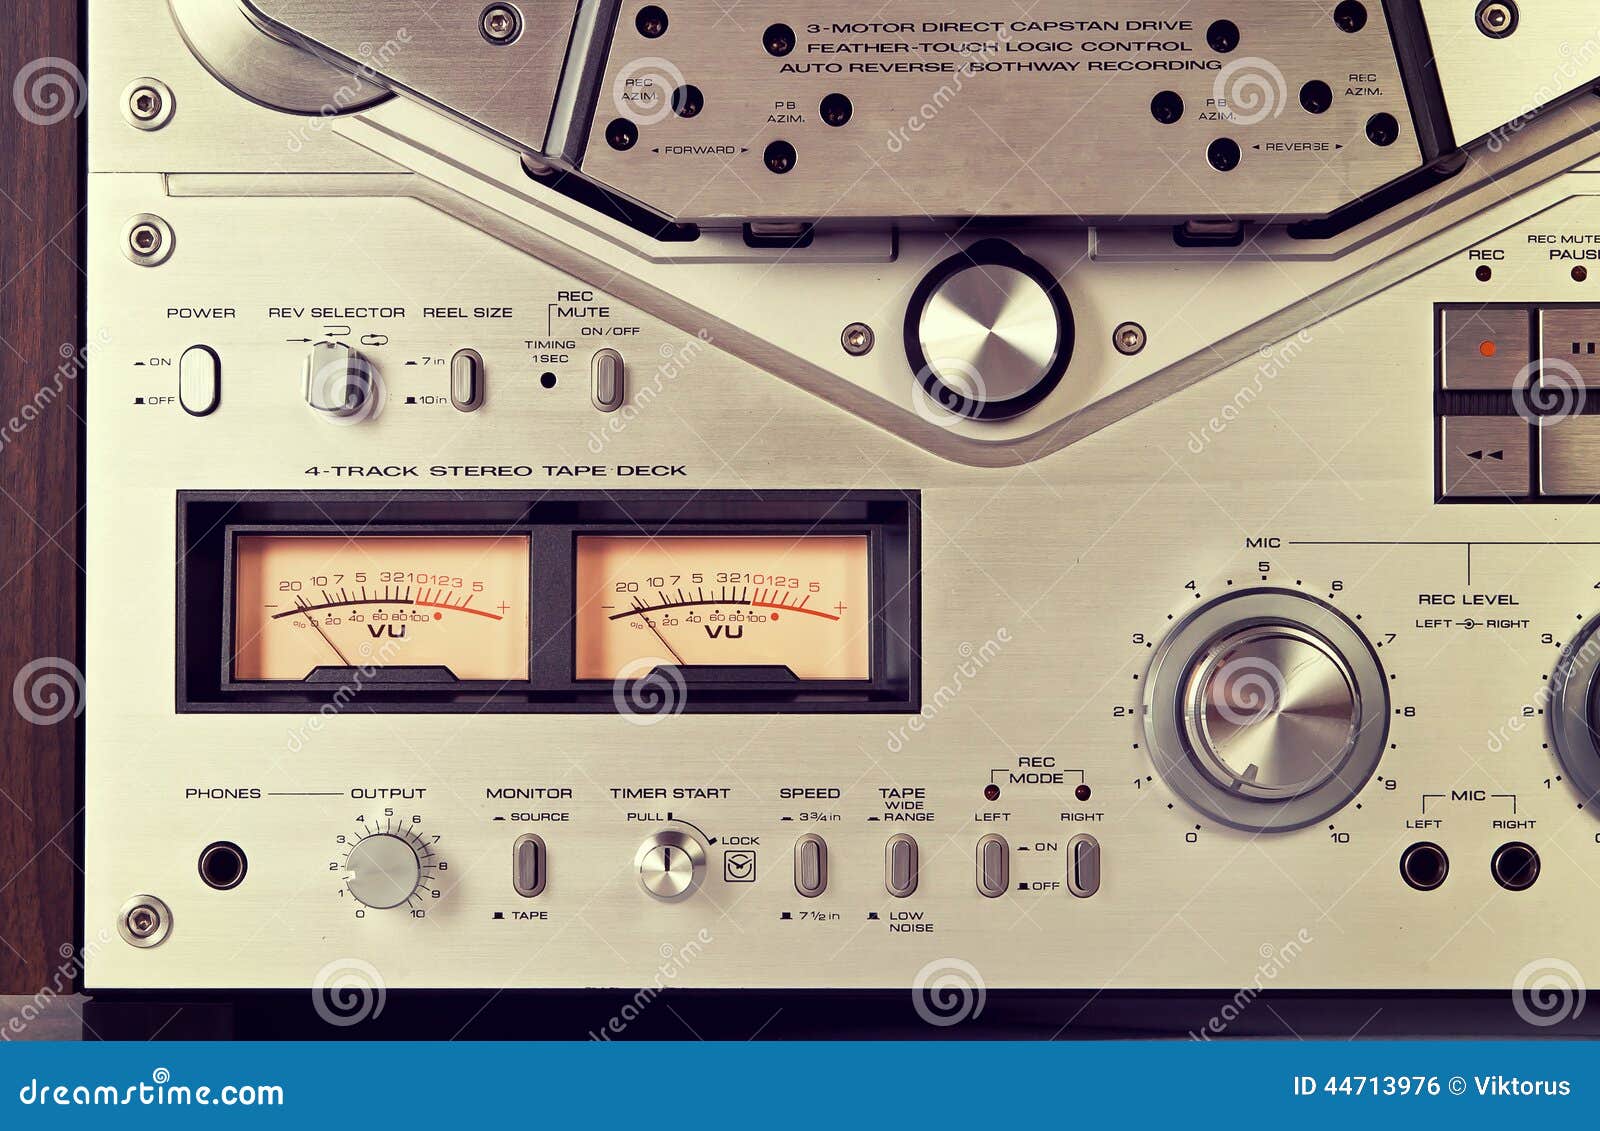 https://thumbs.dreamstime.com/z/analog-stereo-open-reel-tape-deck-recorder-vu-meter-device-close-closeup-vintage-44713976.jpg